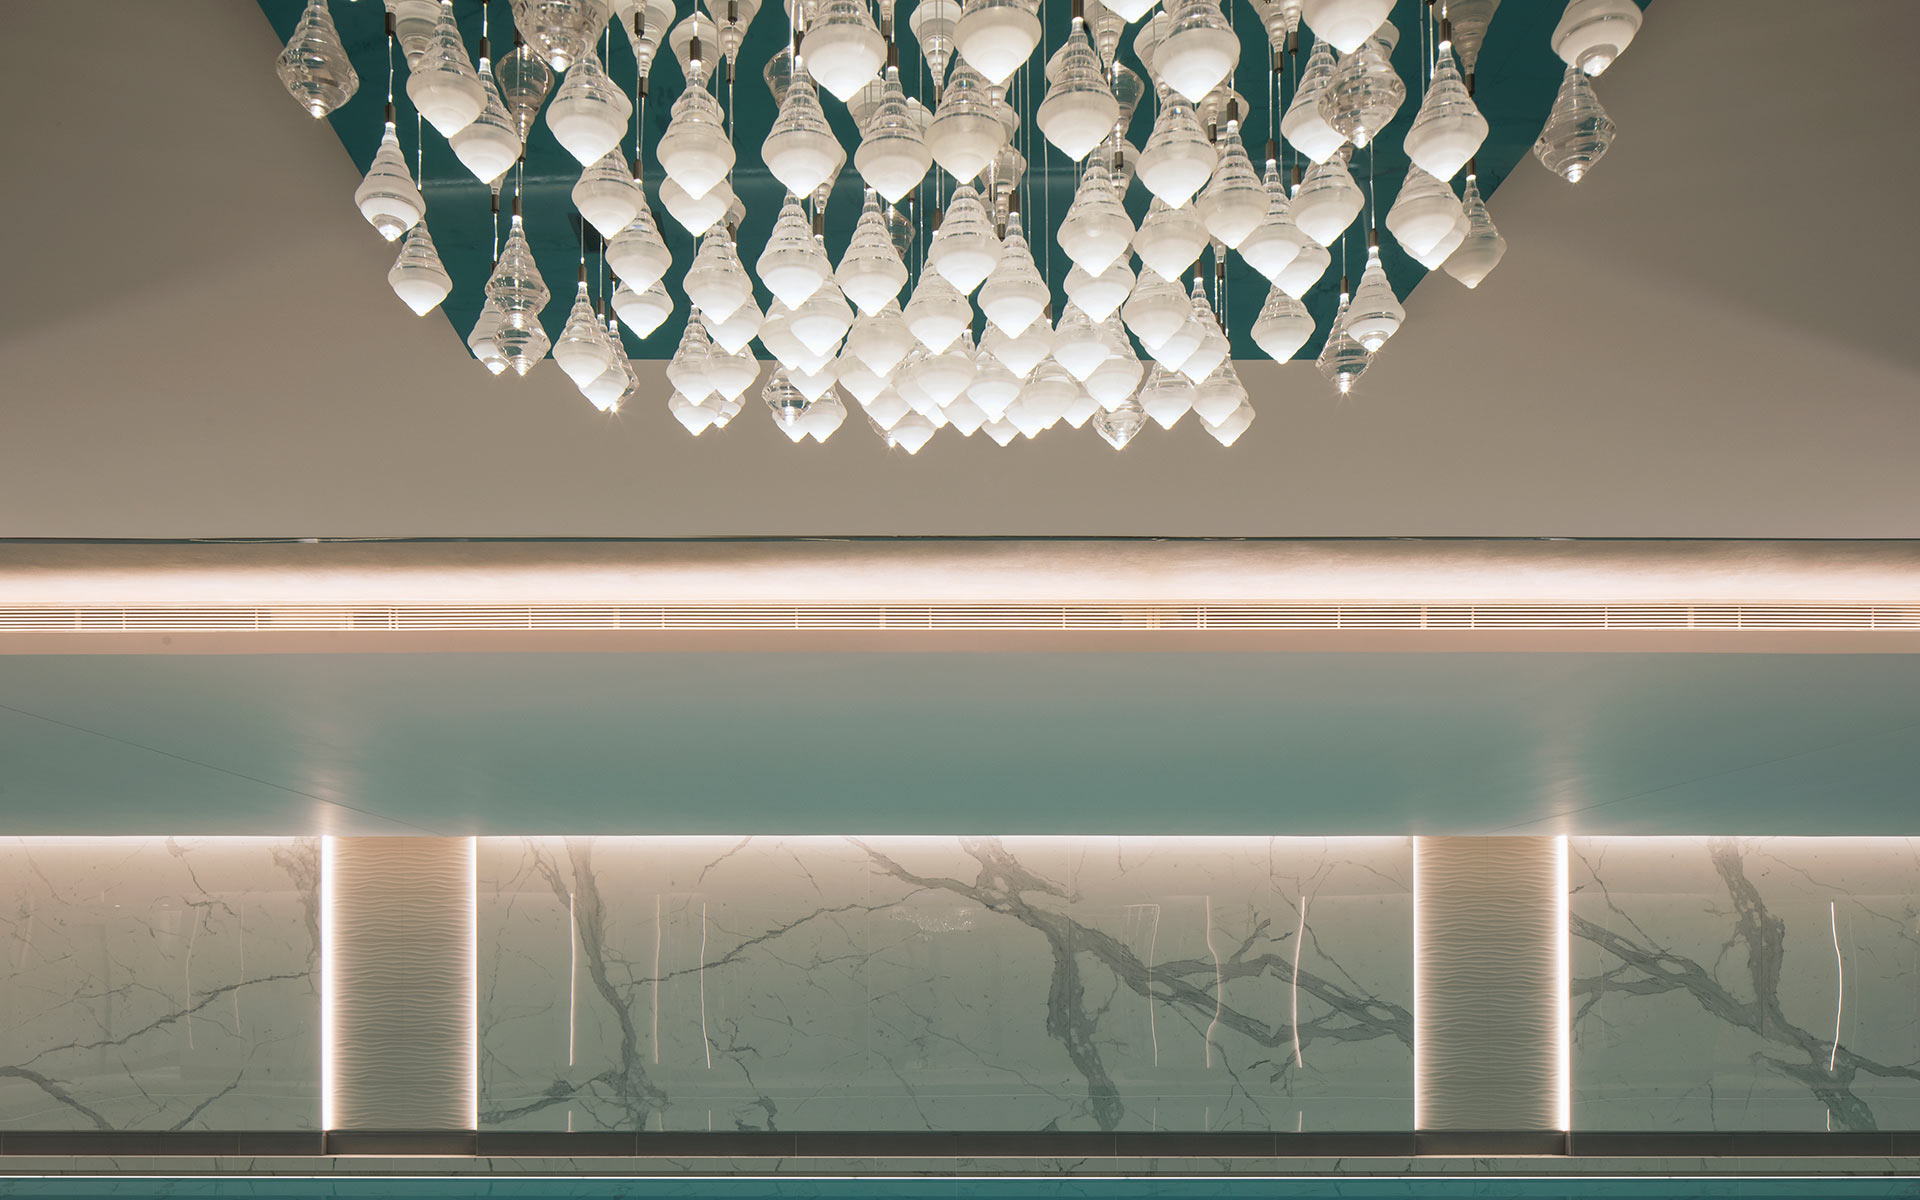 Striking Chandelier Suspended Droplets Cluster Reflective Ceiling Plate Luxury Spa Swimming Pool London Bespoke Lighting Designers Nulty Bespoke